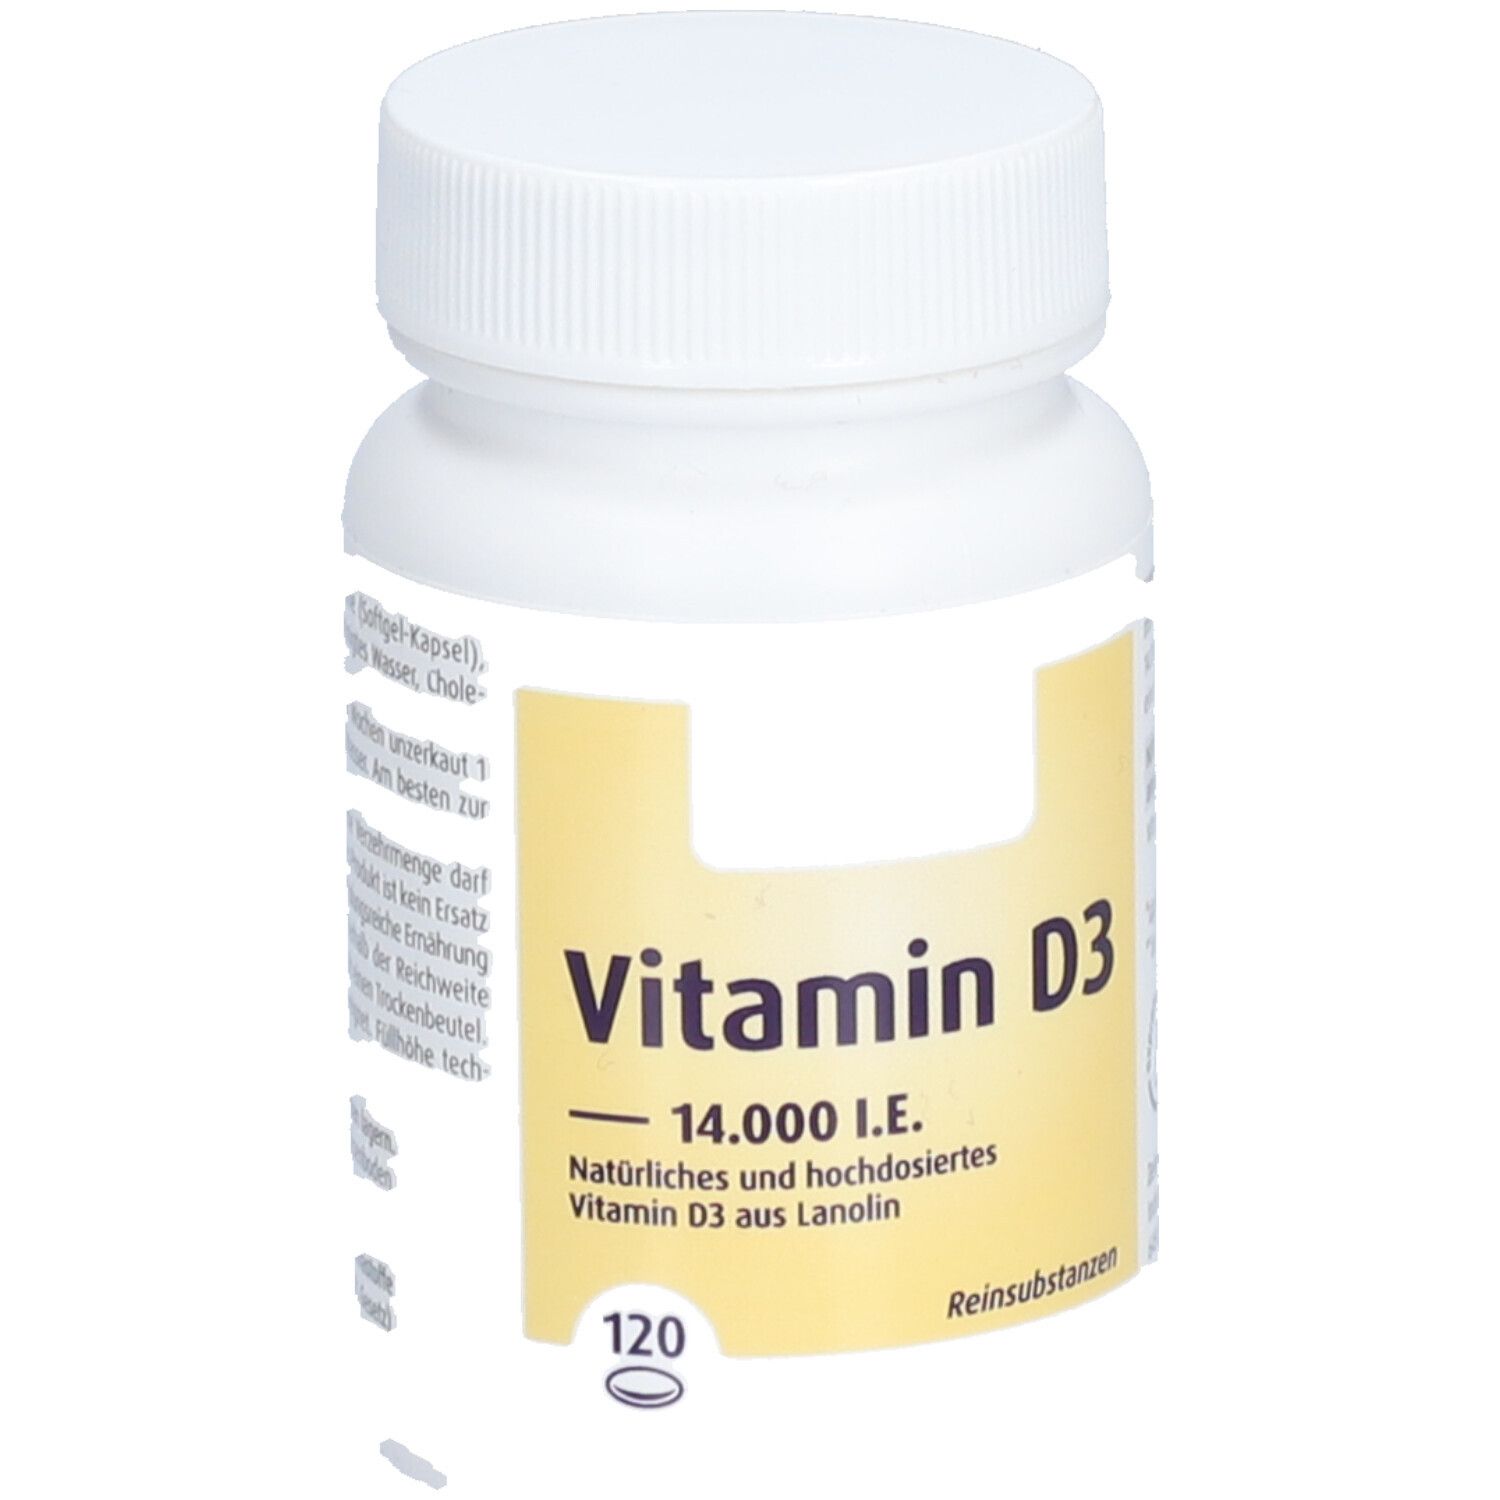 ZeinPharma® Vitamin D3 Kapseln 14.000 I.E. Softgel